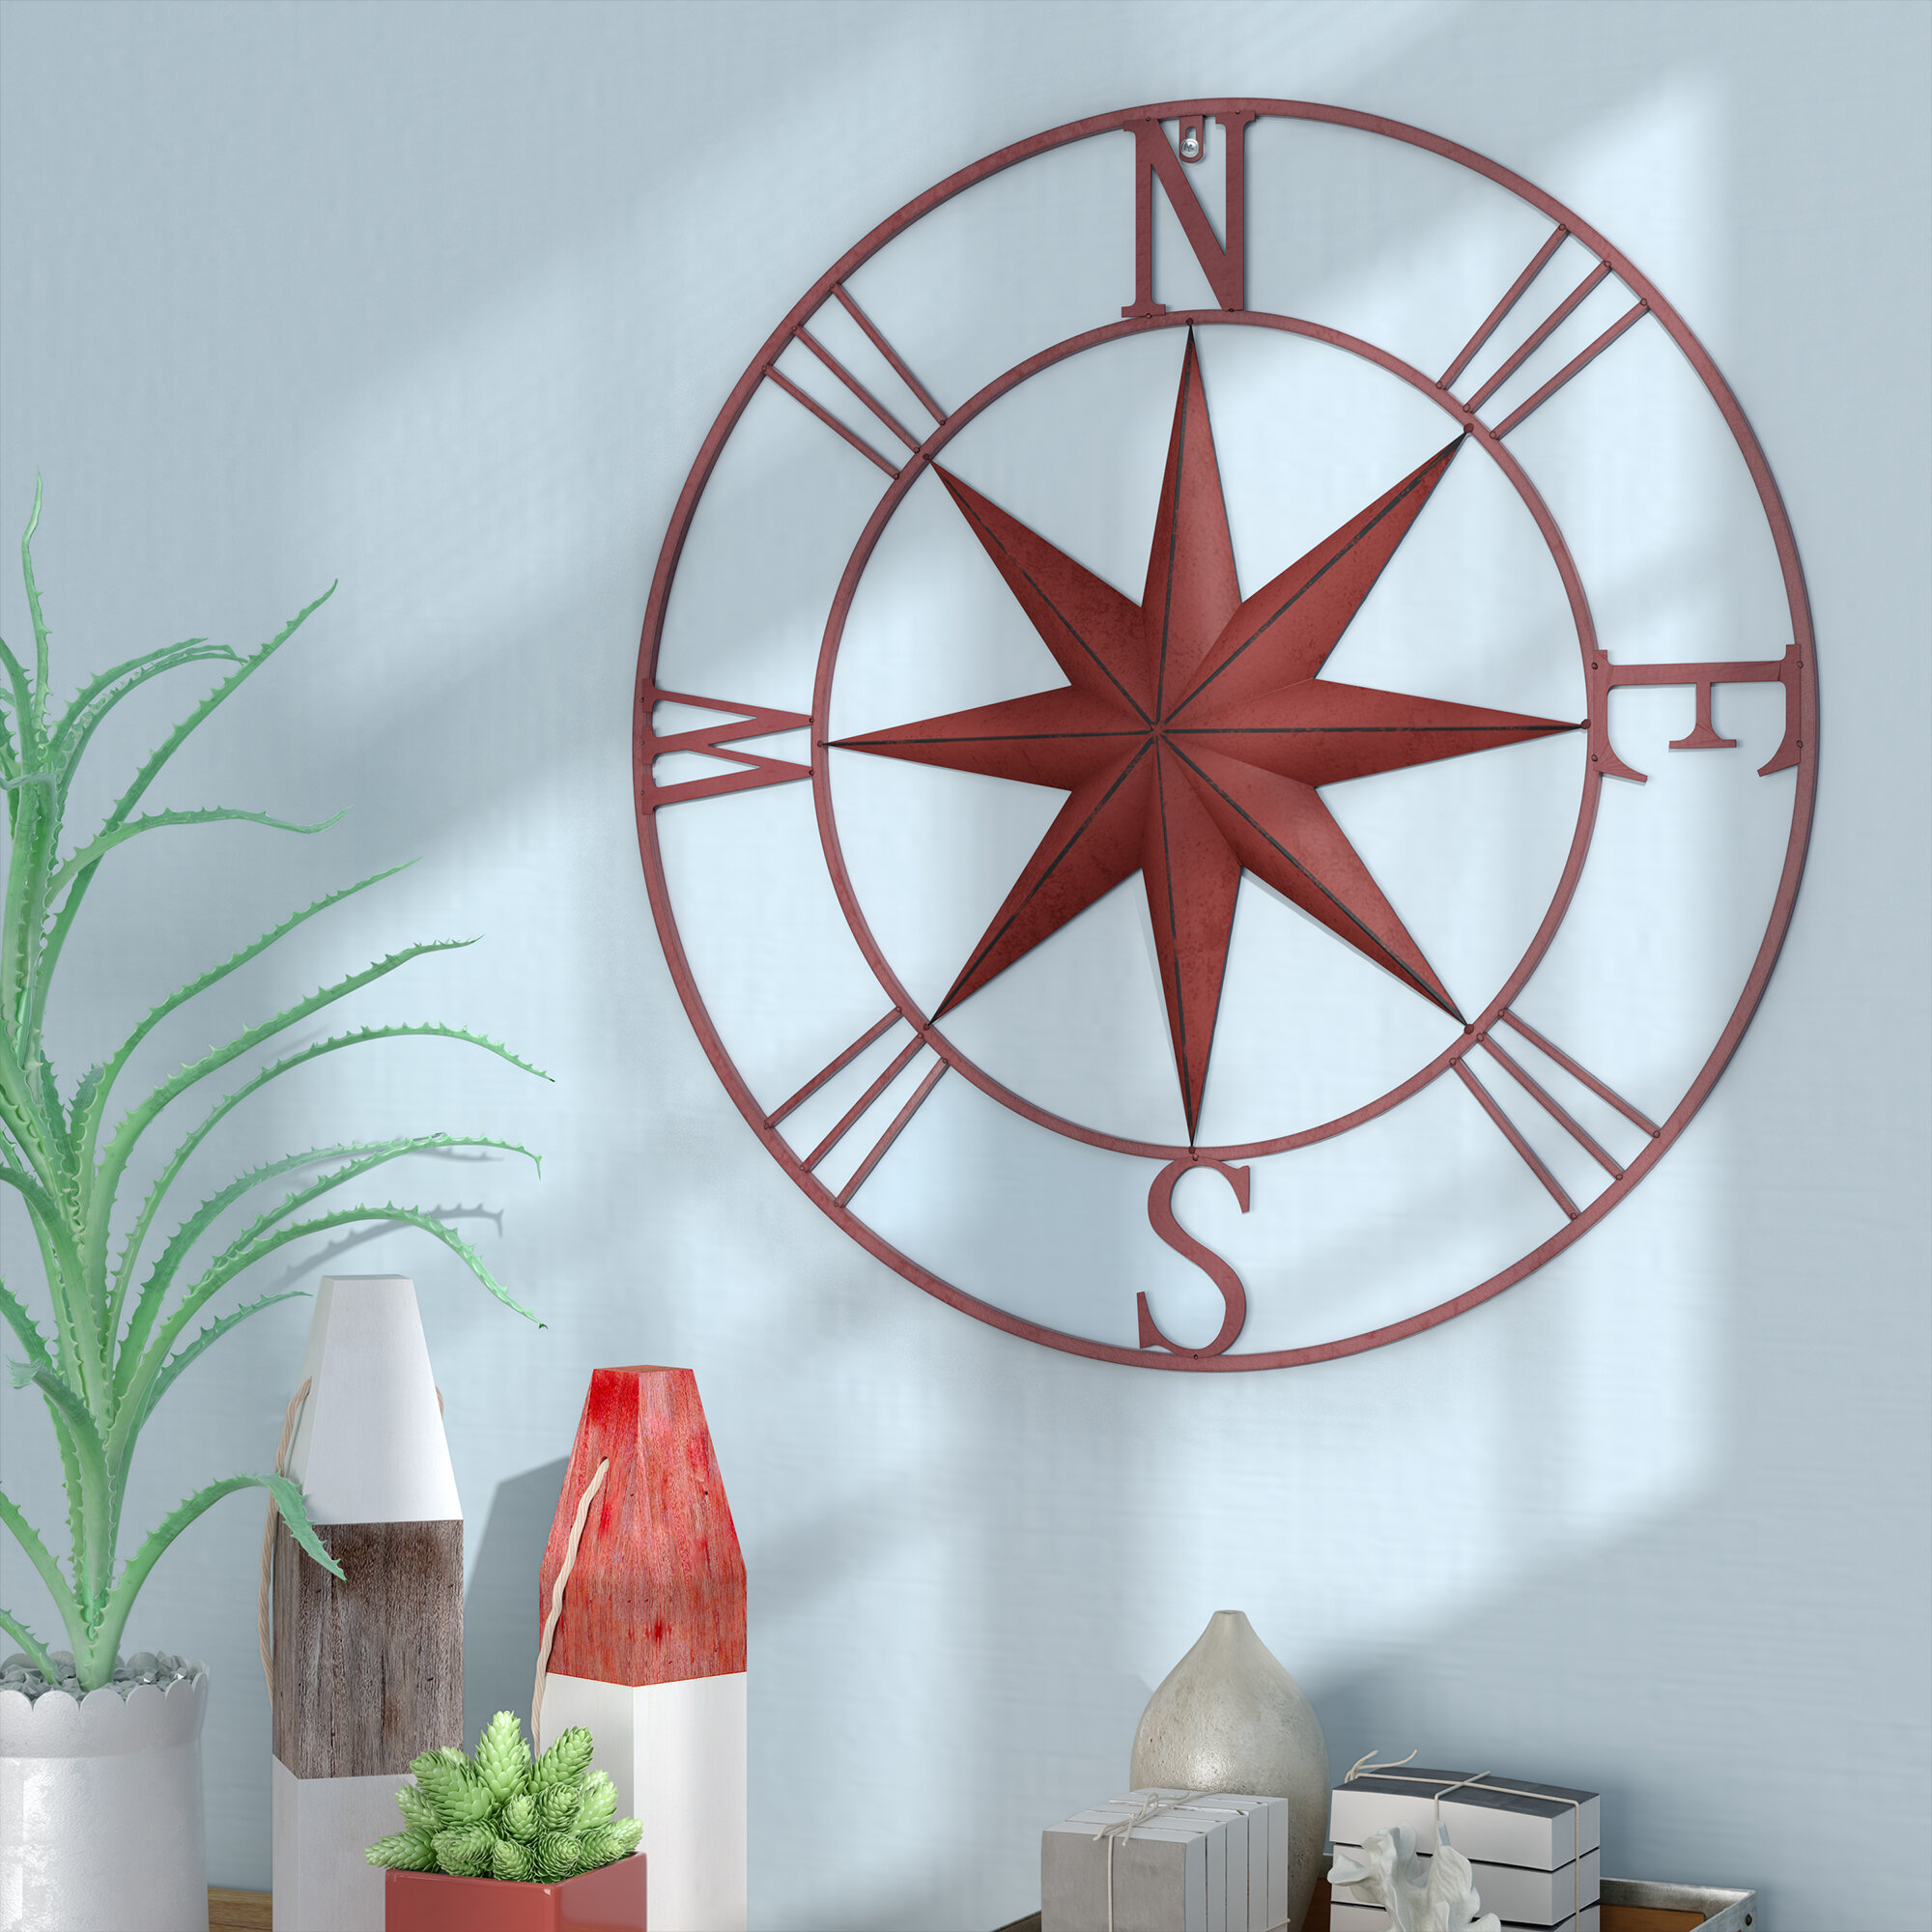 Beachcrest Home Antique Compass Rose Wall Decor Reviews Wayfair